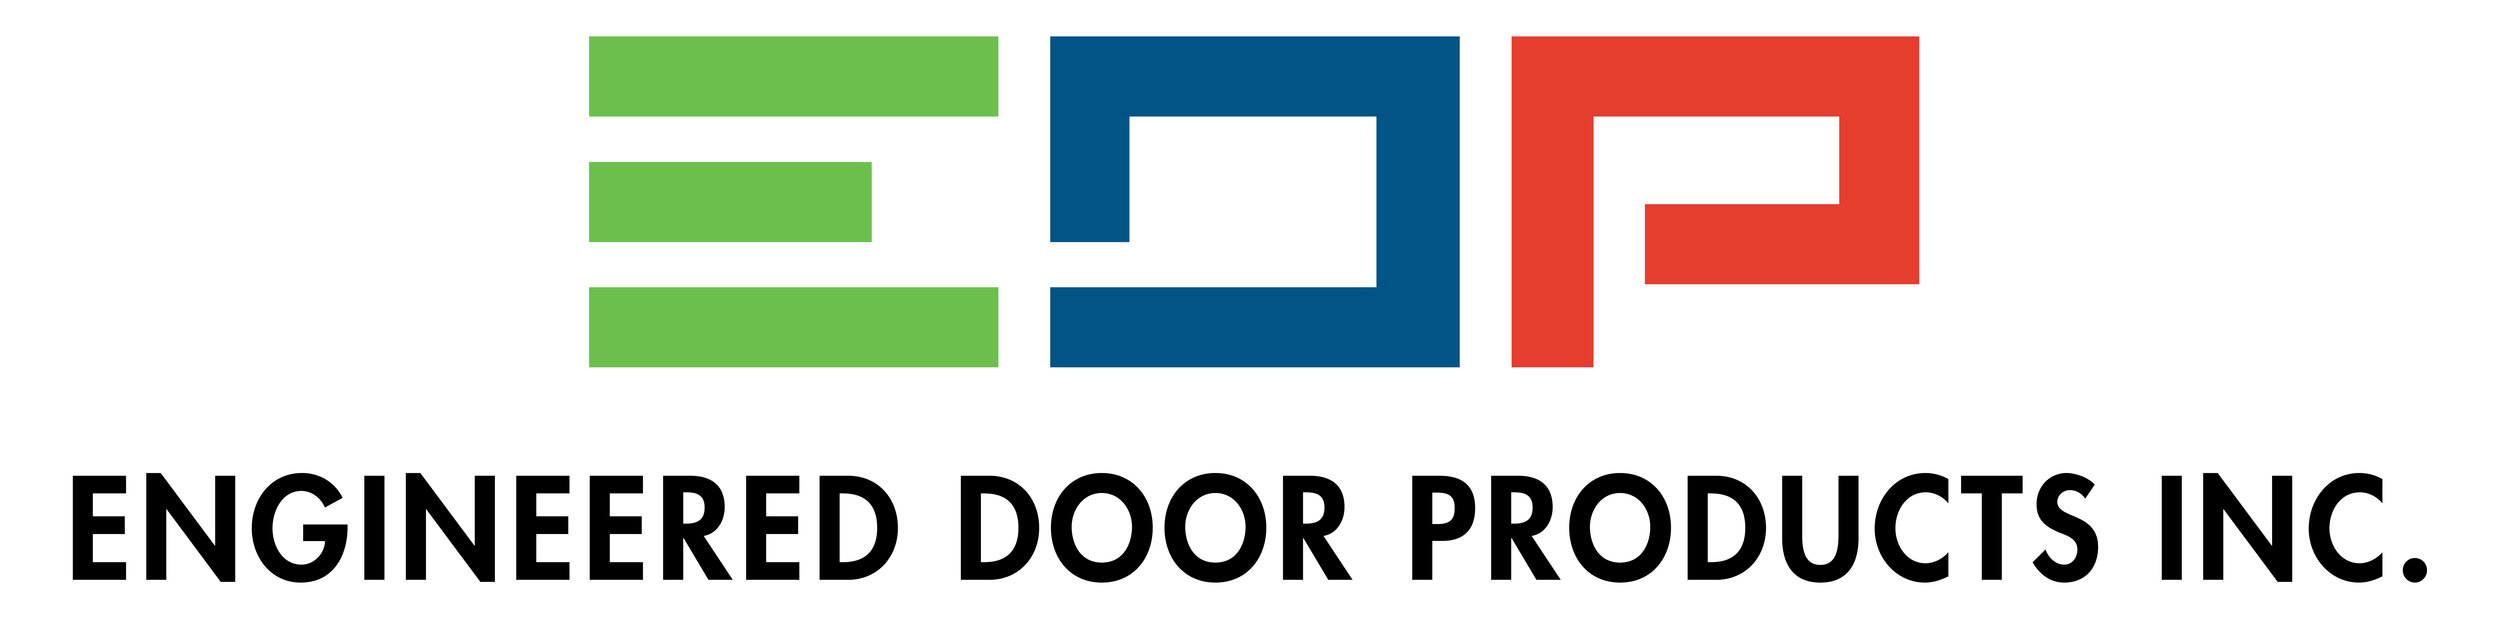 Engineered Door Logo - Web.jpg